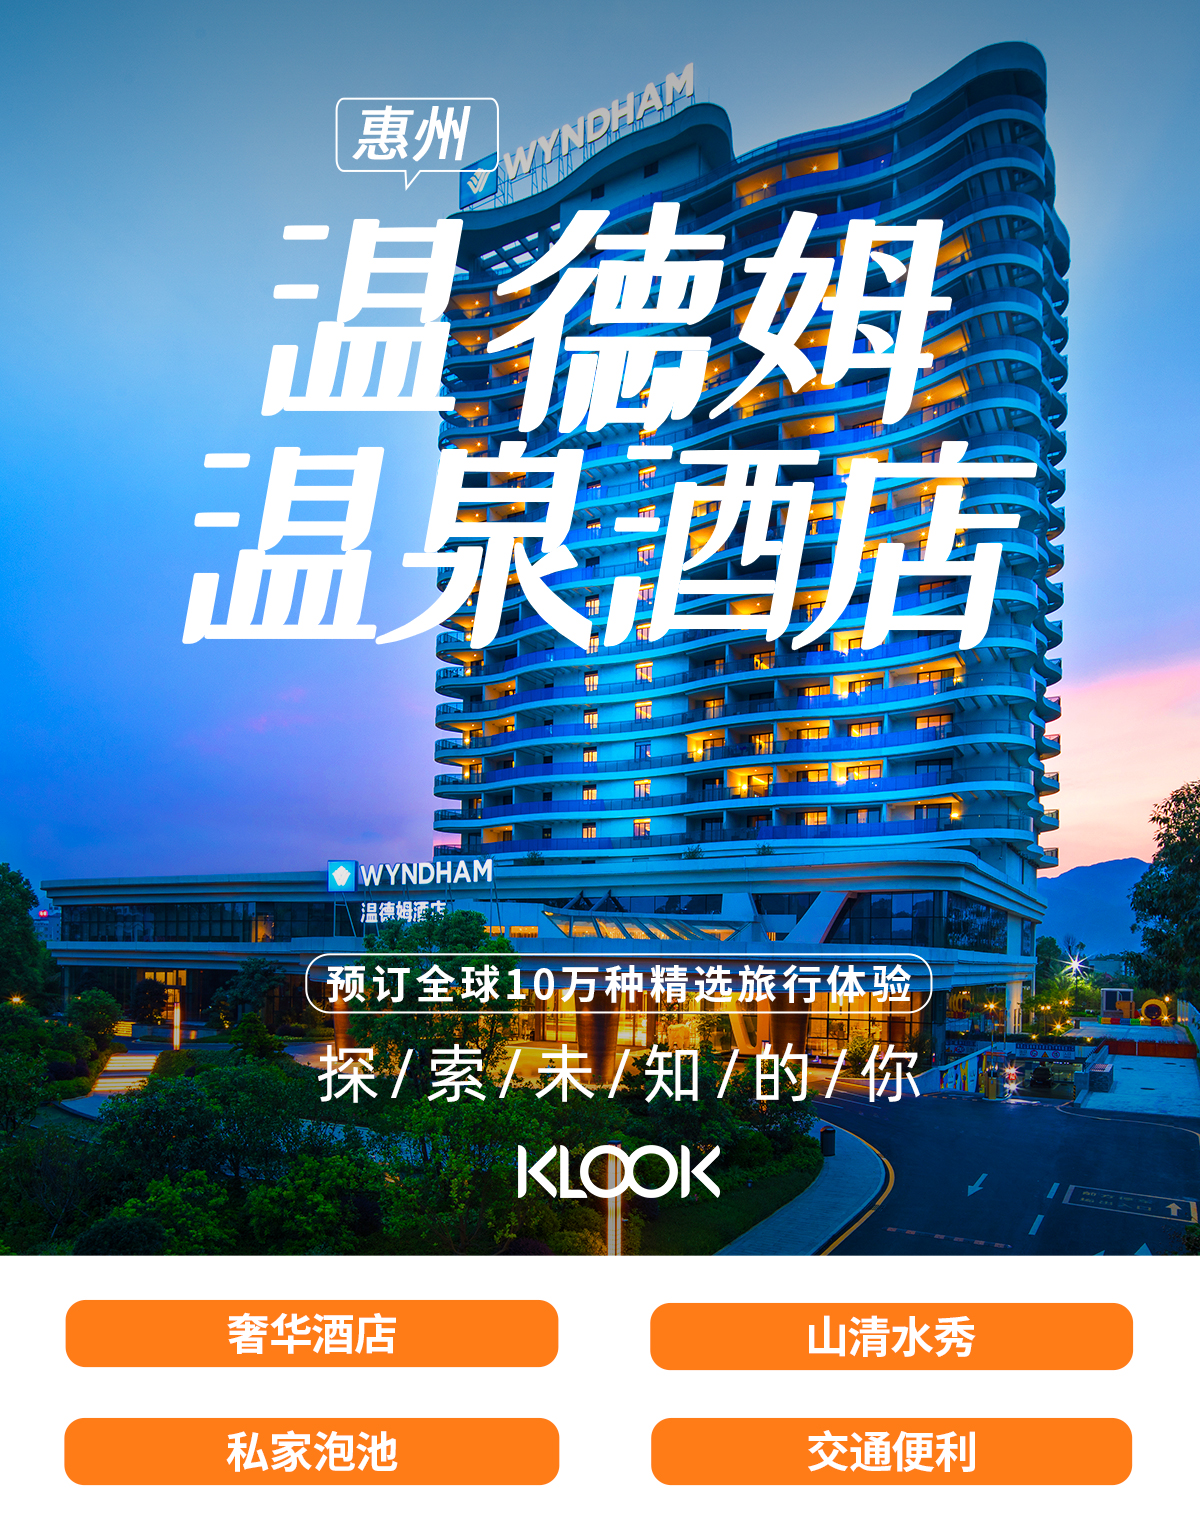 Huizhou Nankunshan Wyndham Hot Spring Hotel Accommodation Package